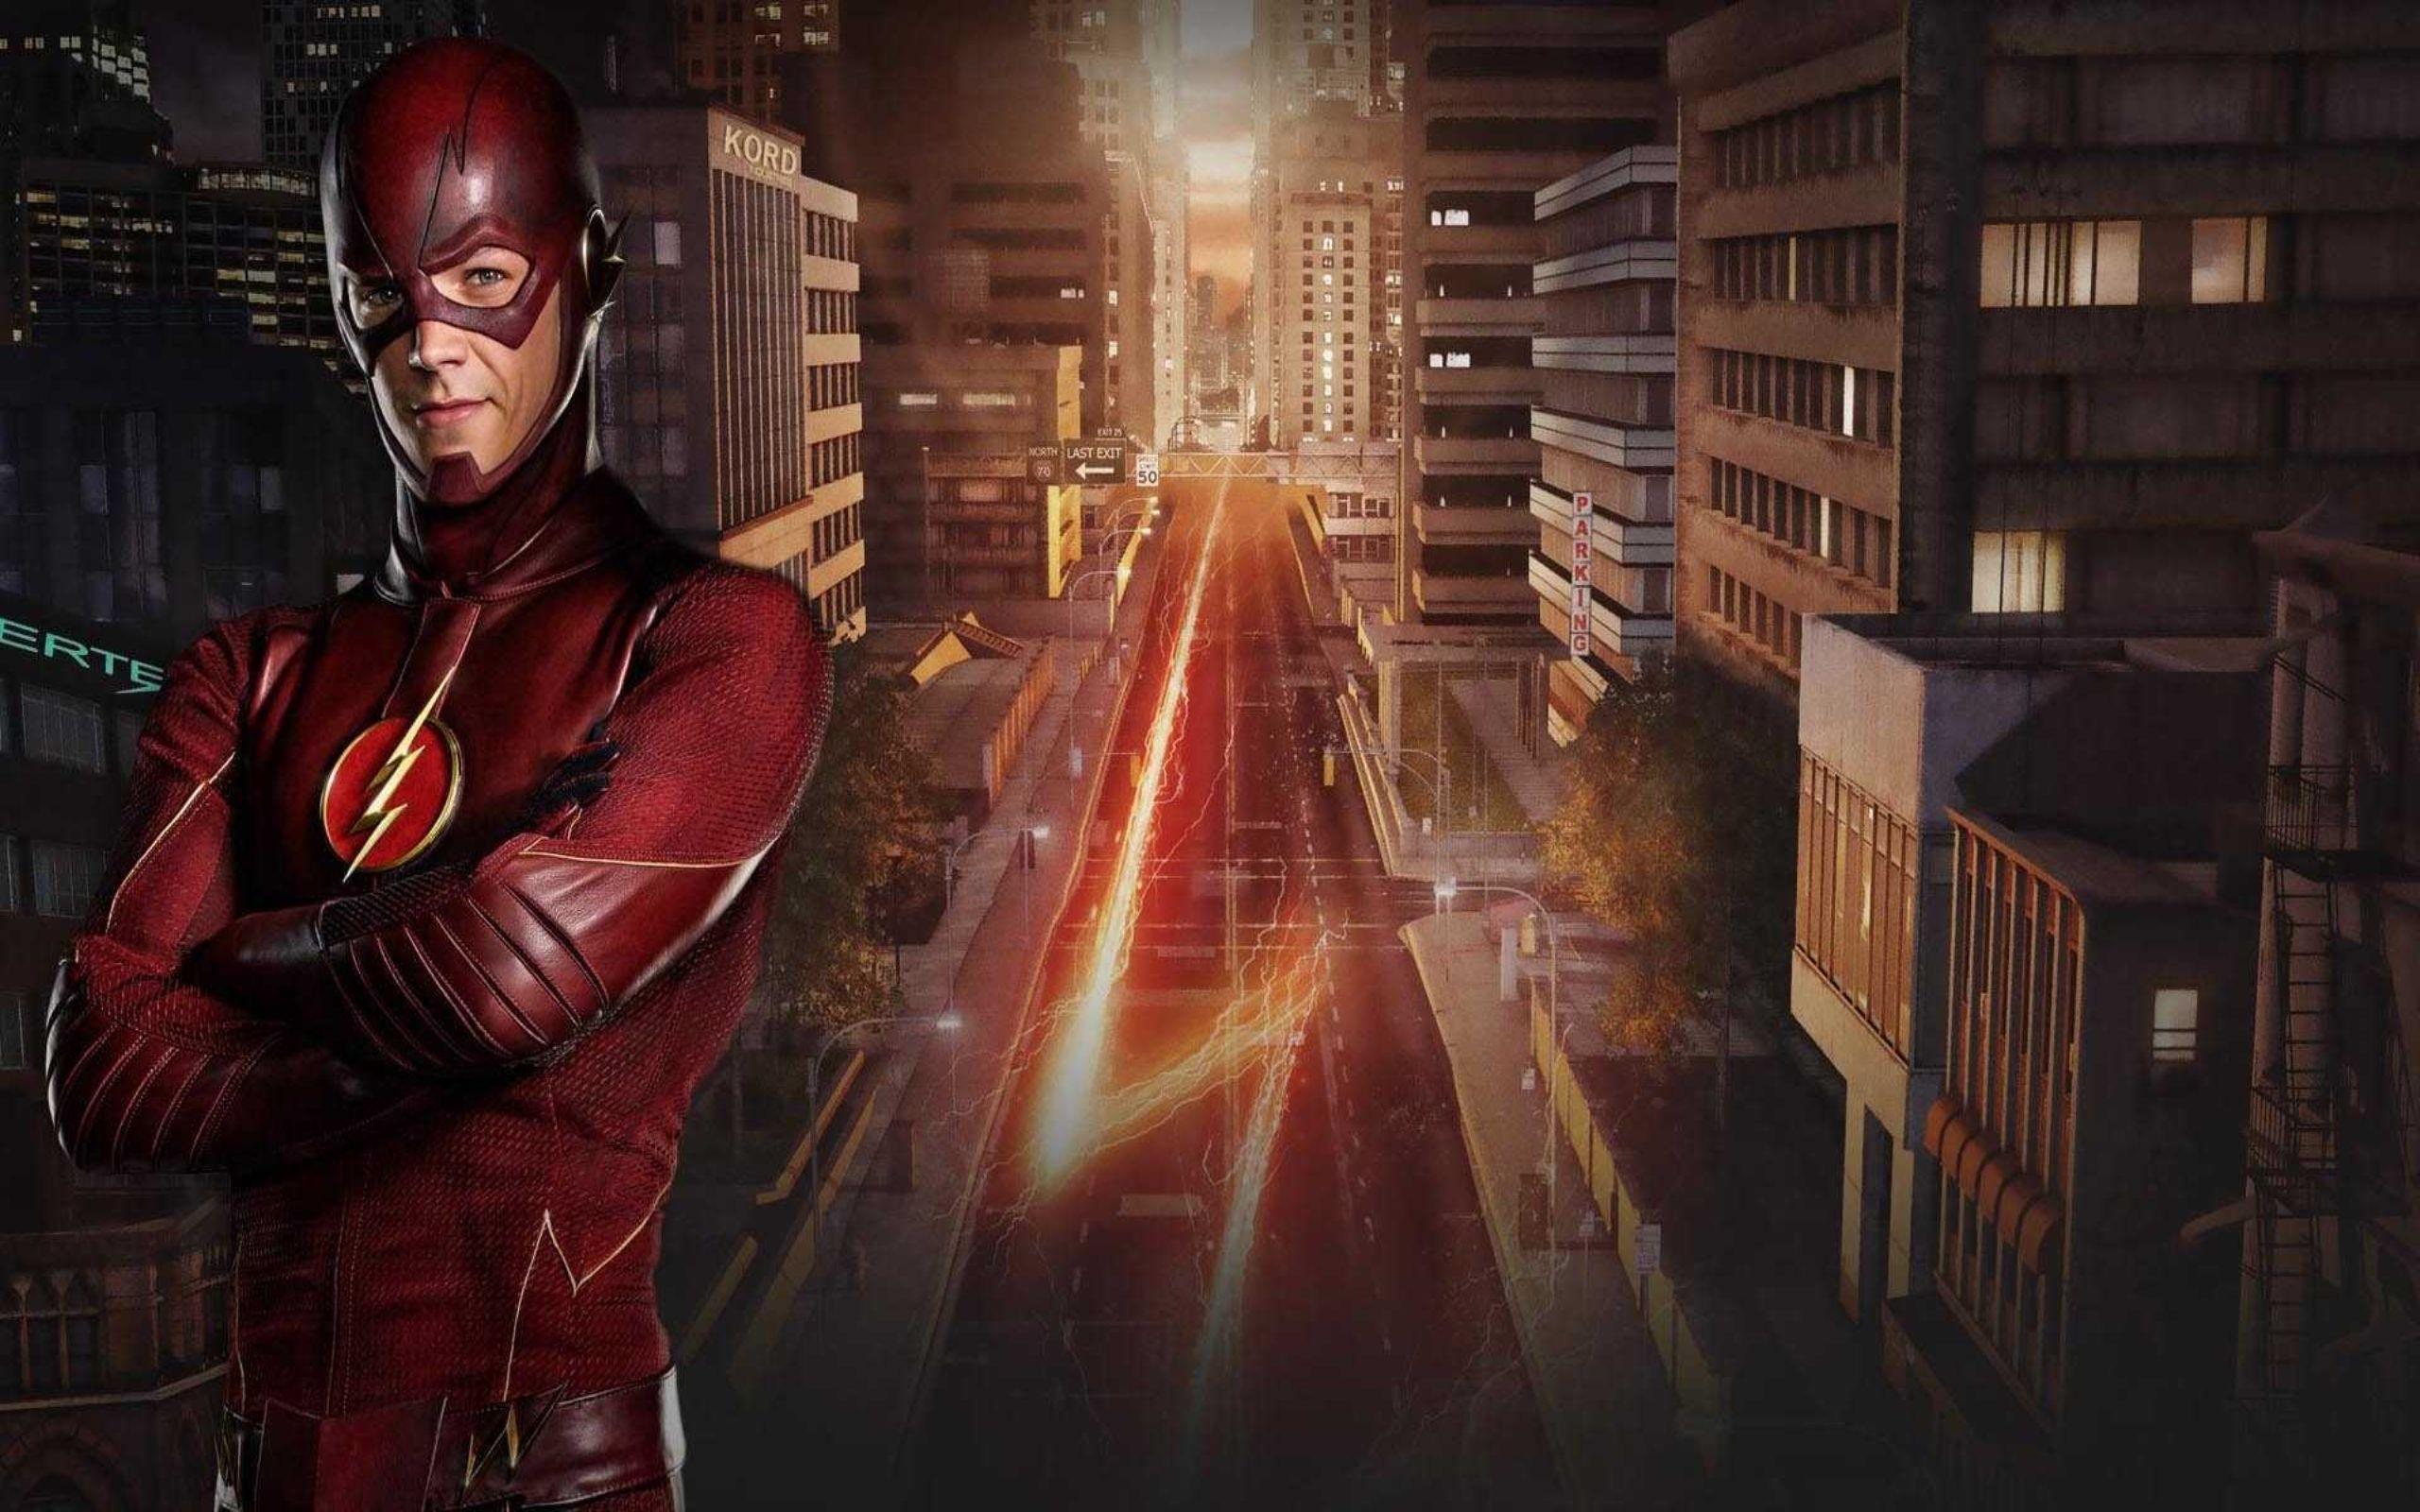 The Flash TV Series Wallpaper